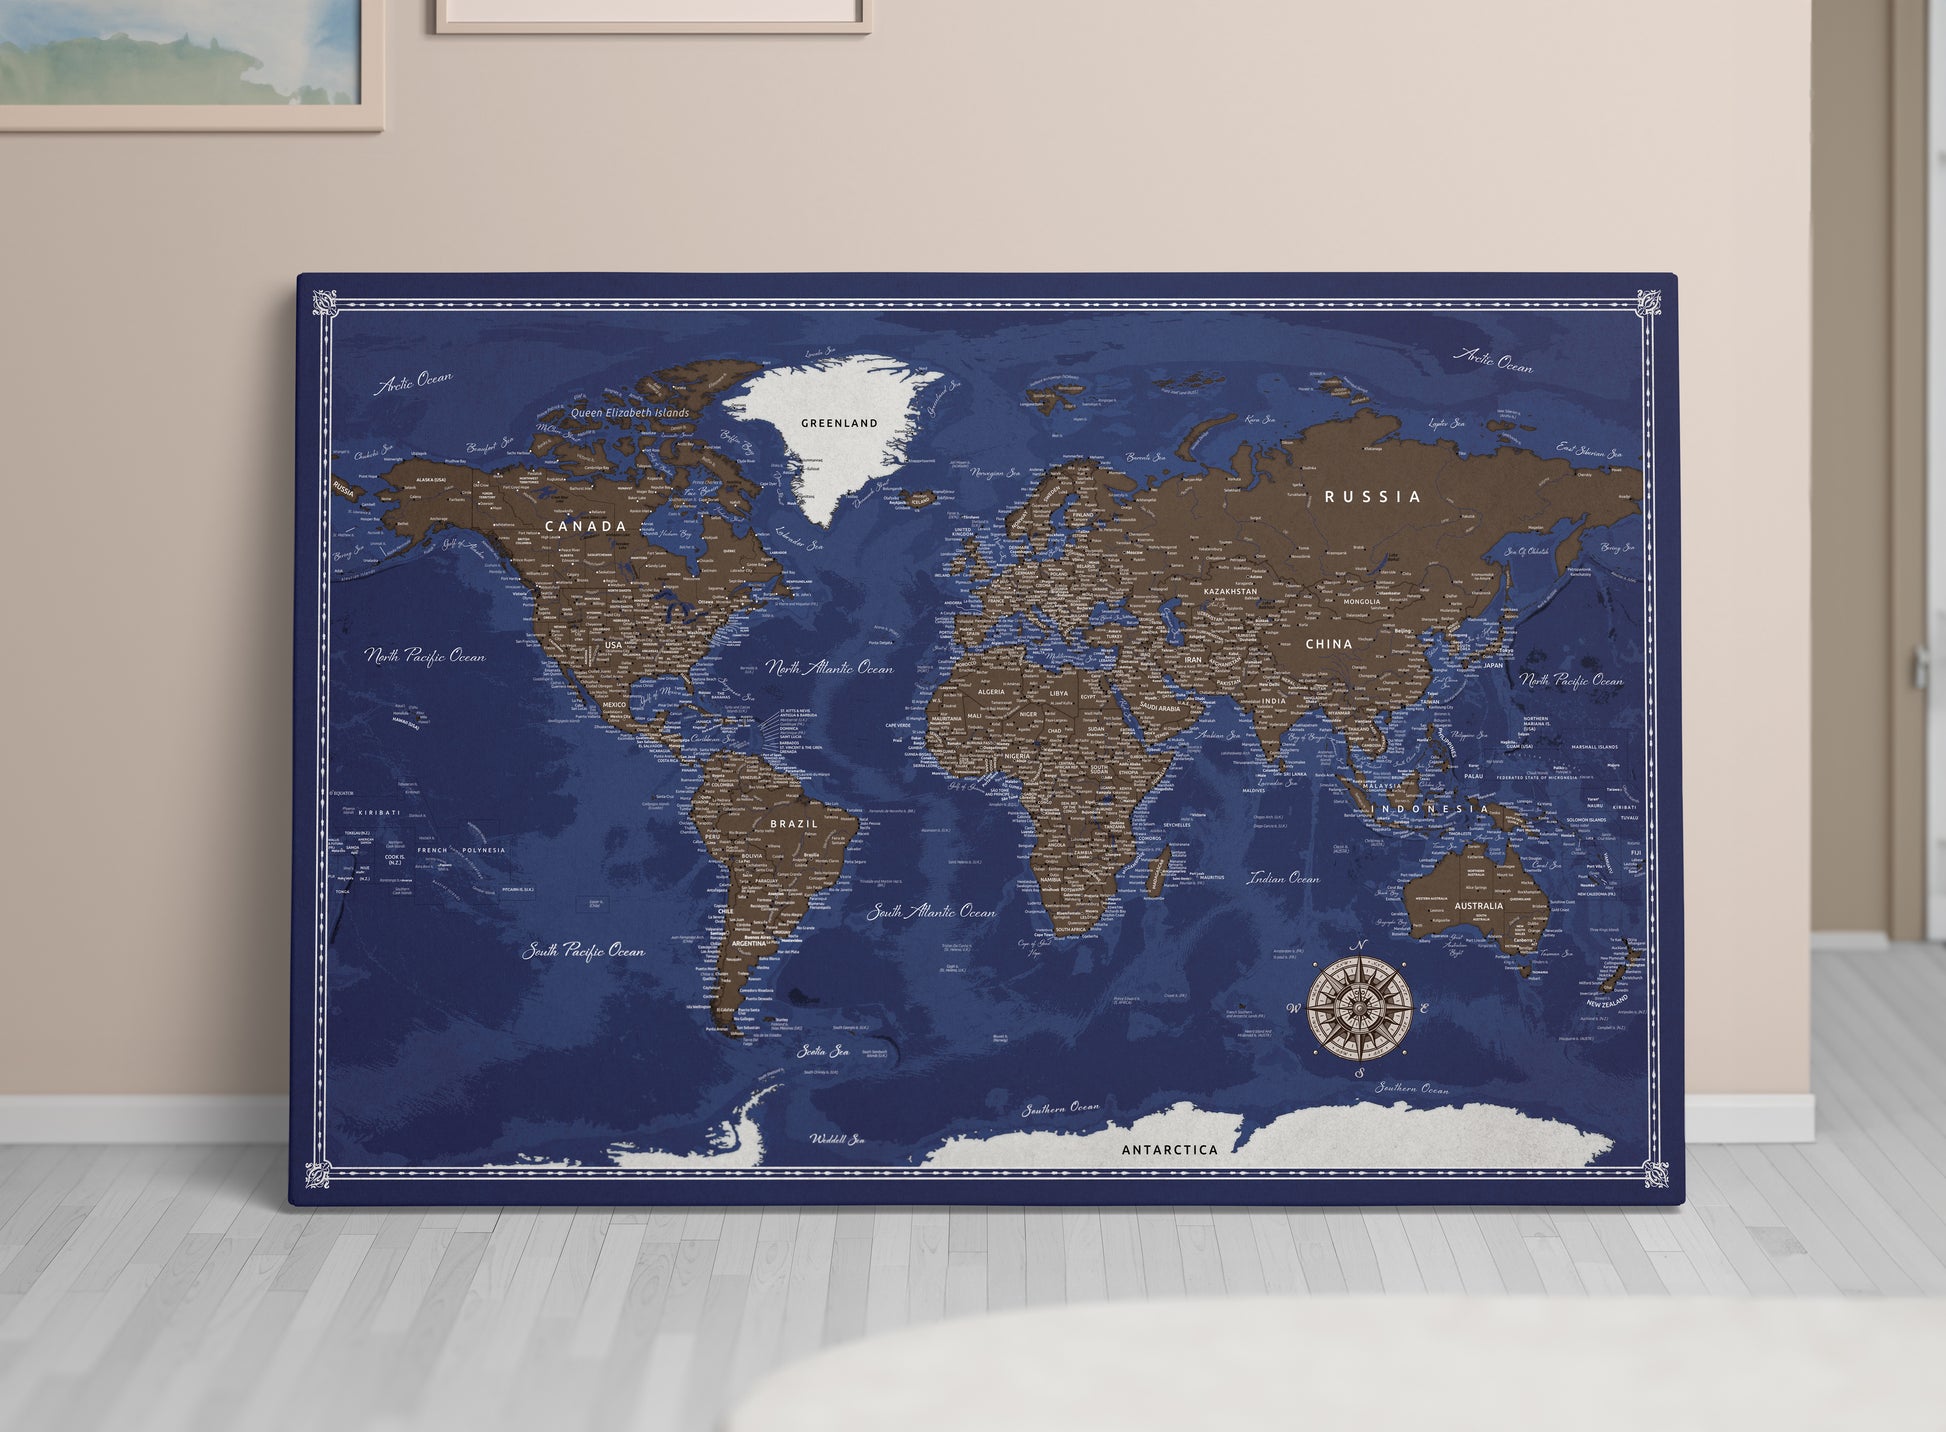  Canvas Art Bay Atlas Push Pin World Map